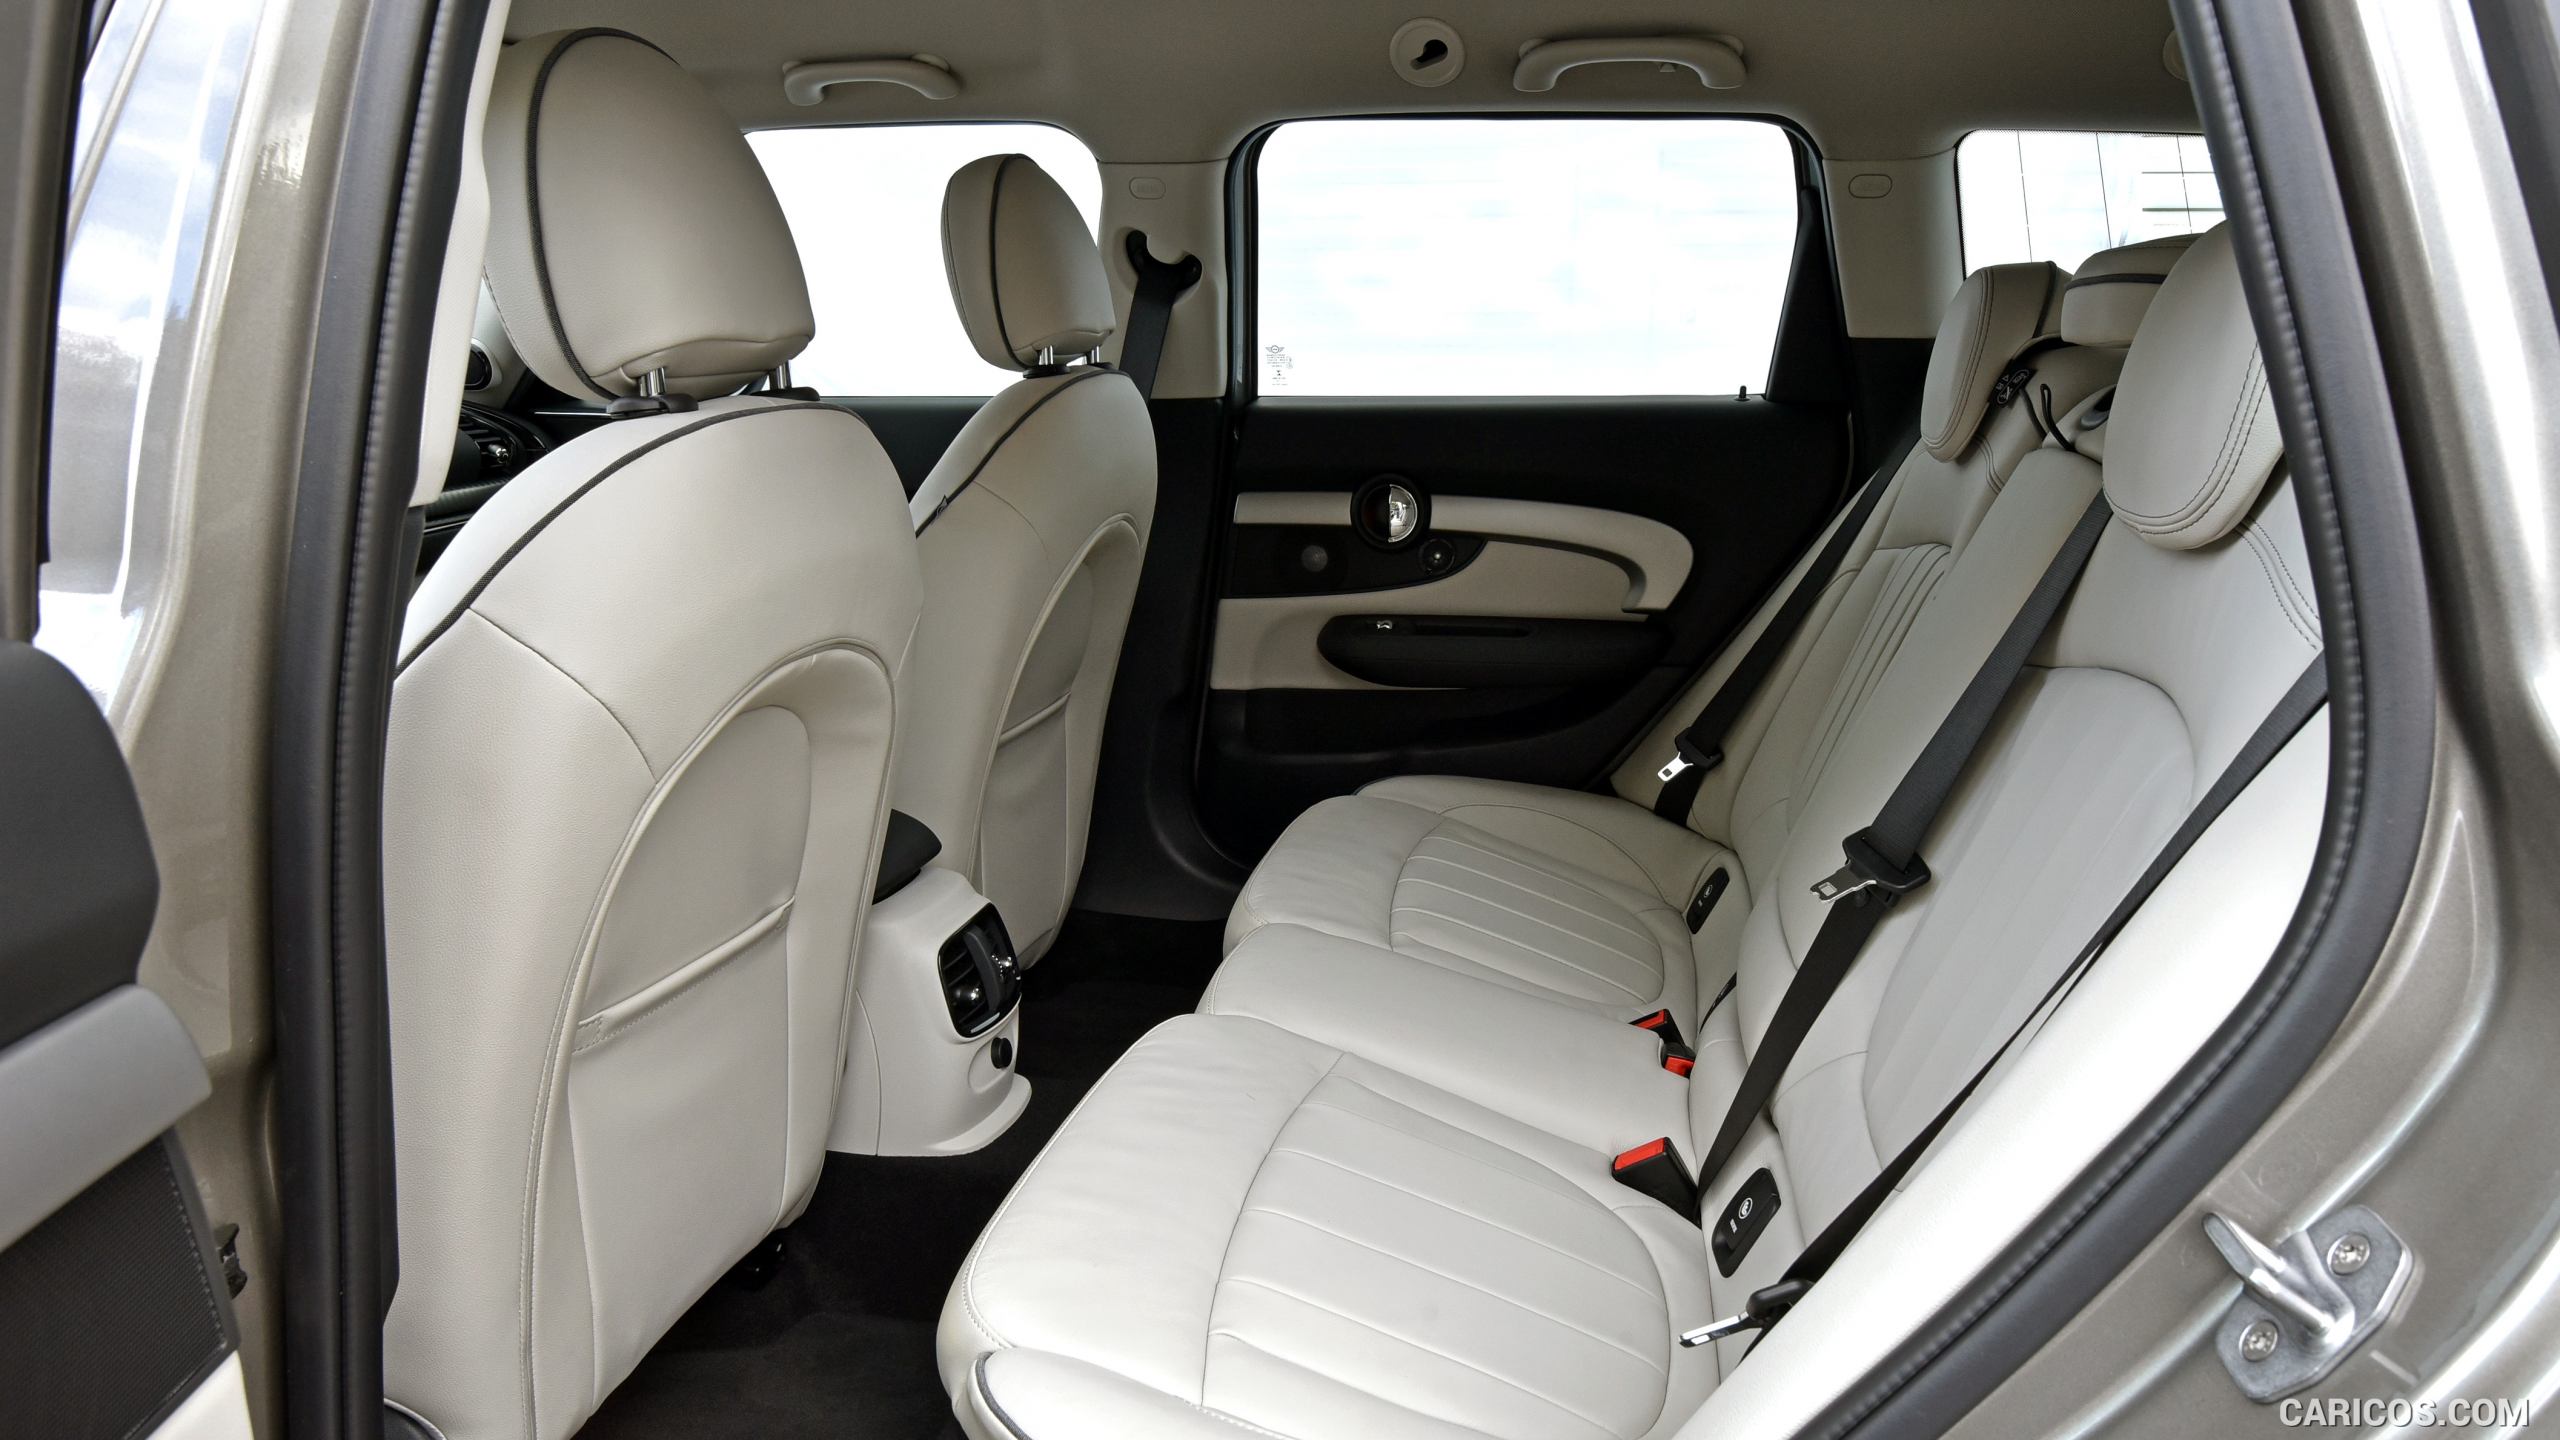 2016 MINI Cooper S Clubman in Metallic Melting Silver - Interior, Rear Seats, #247 of 380